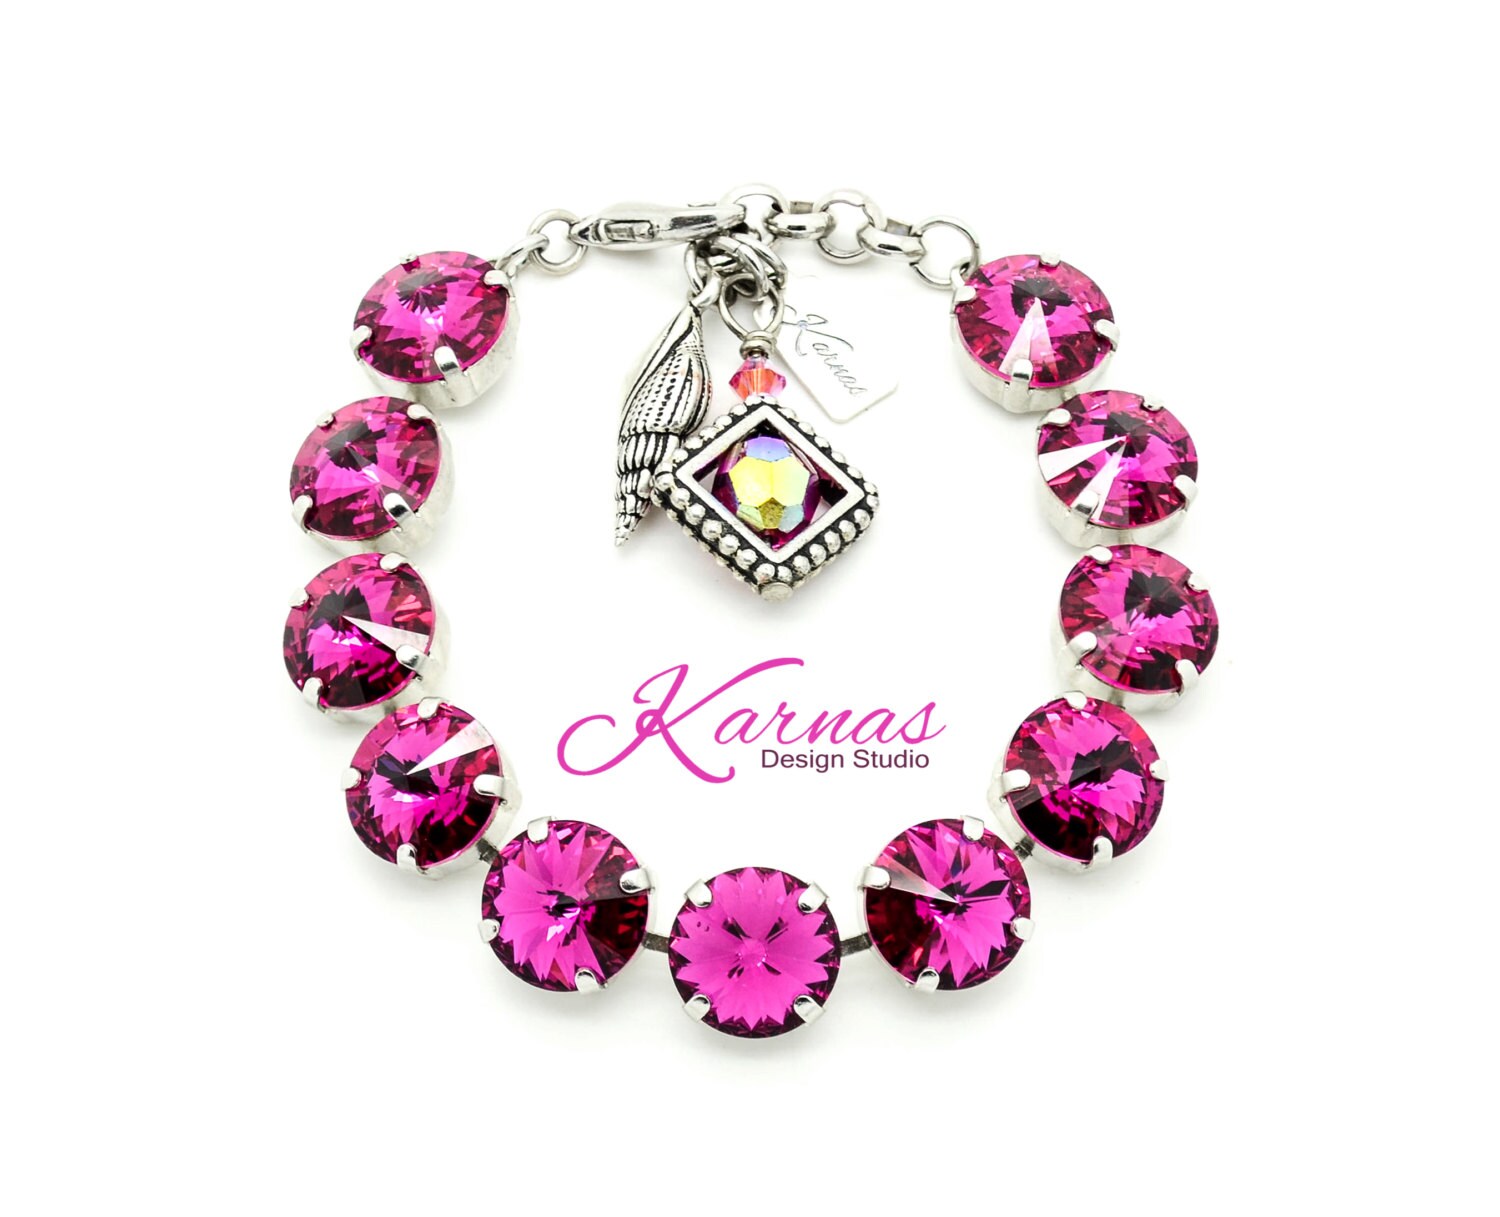 Fuchsia 12mm Charm Bracelet K.d.s Premium Crystal Pick Your Finish Karnas Design Studio Free Shipping